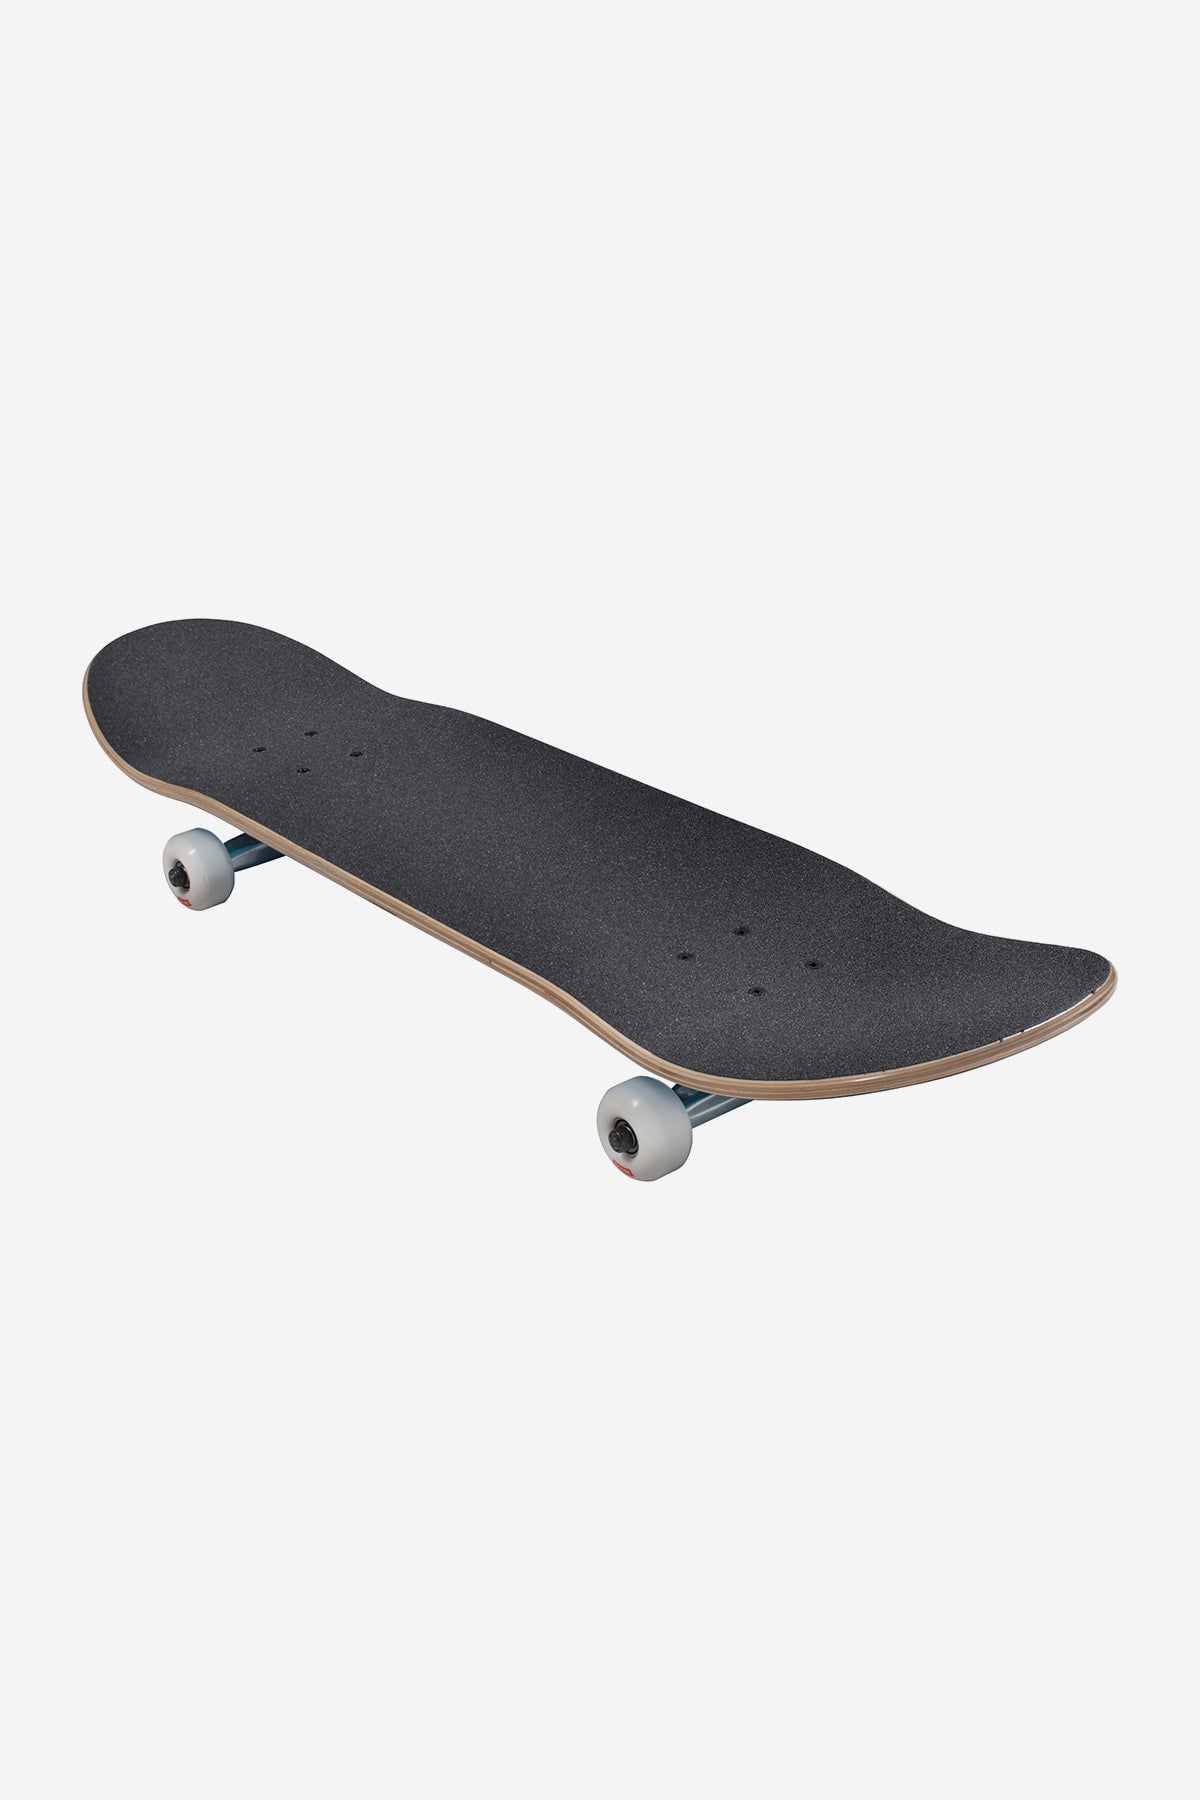 Globe - Goodstock - Clay - 8,5" Komplett Skateboard